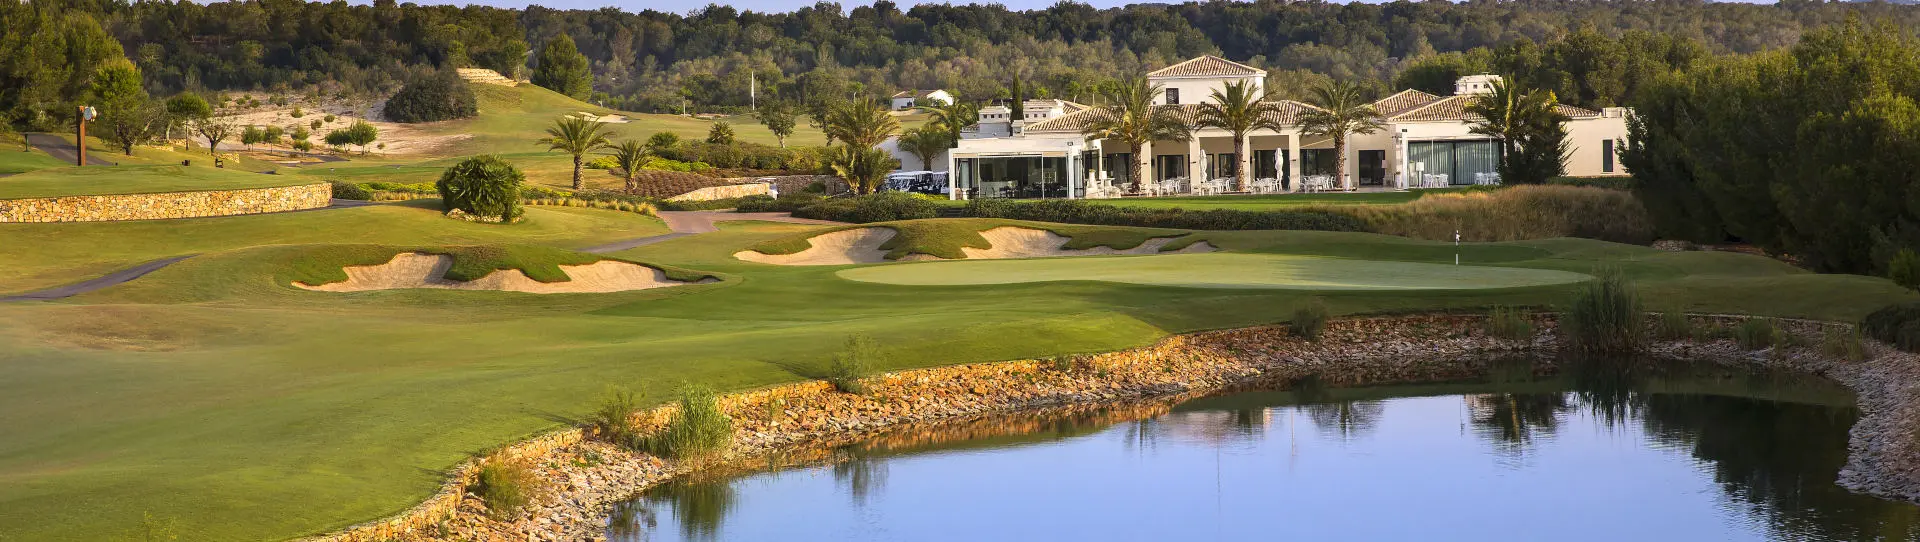 Spain golf courses - Las Colinas Golf & Country Club - Photo 3